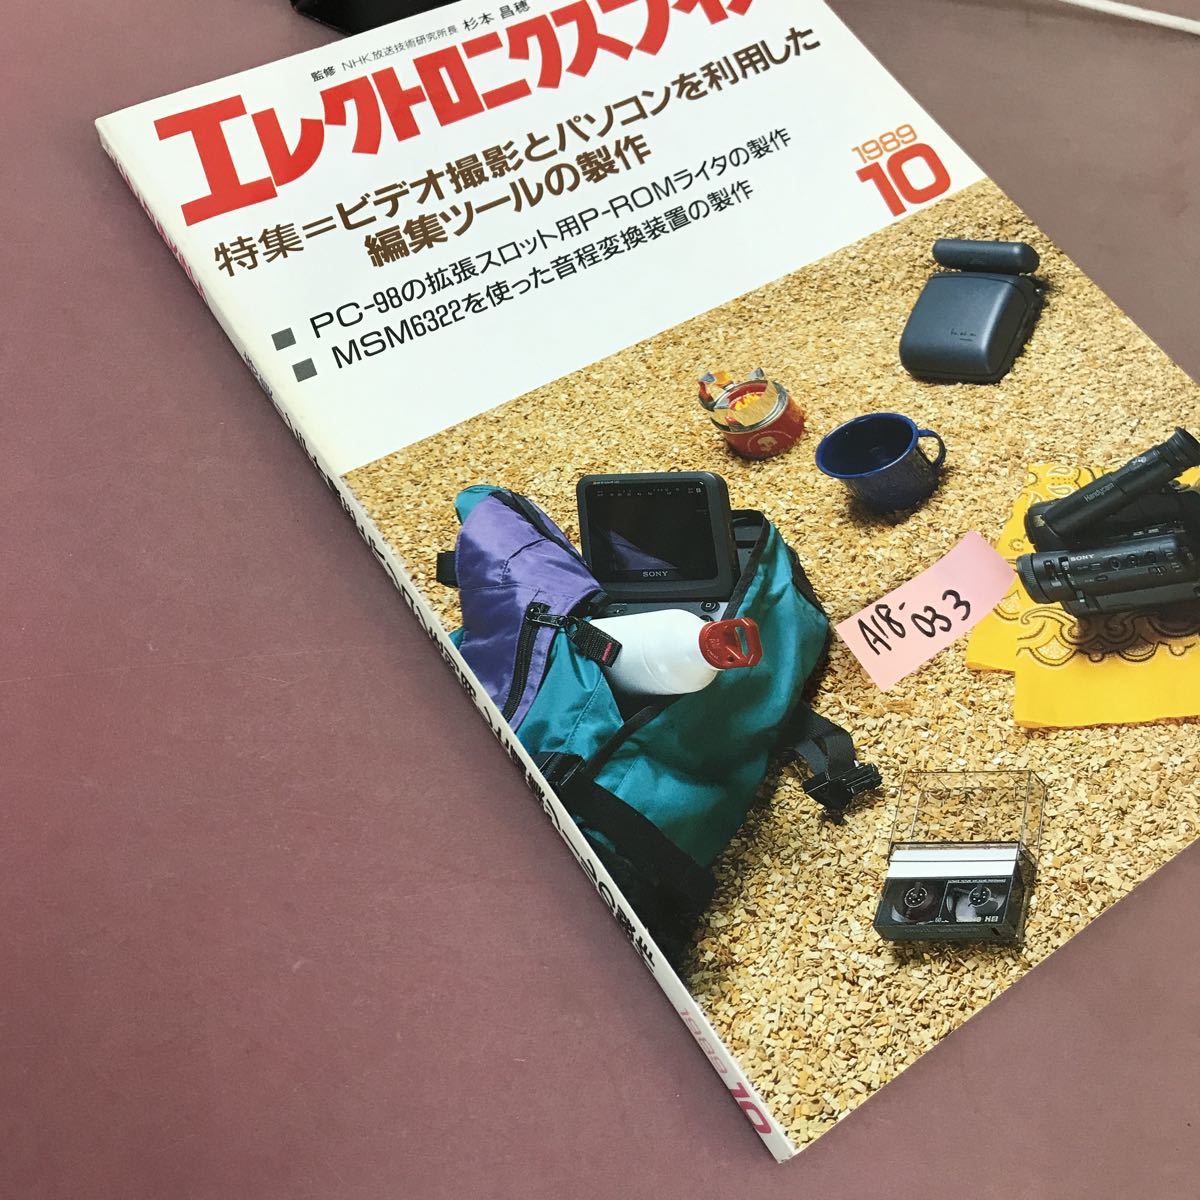 A18-033 エレクトロニクスライフ 1989.10 特集ビデオ撮影とパソコンを利用した編集ツールの製作 日本放送出版協会_画像2